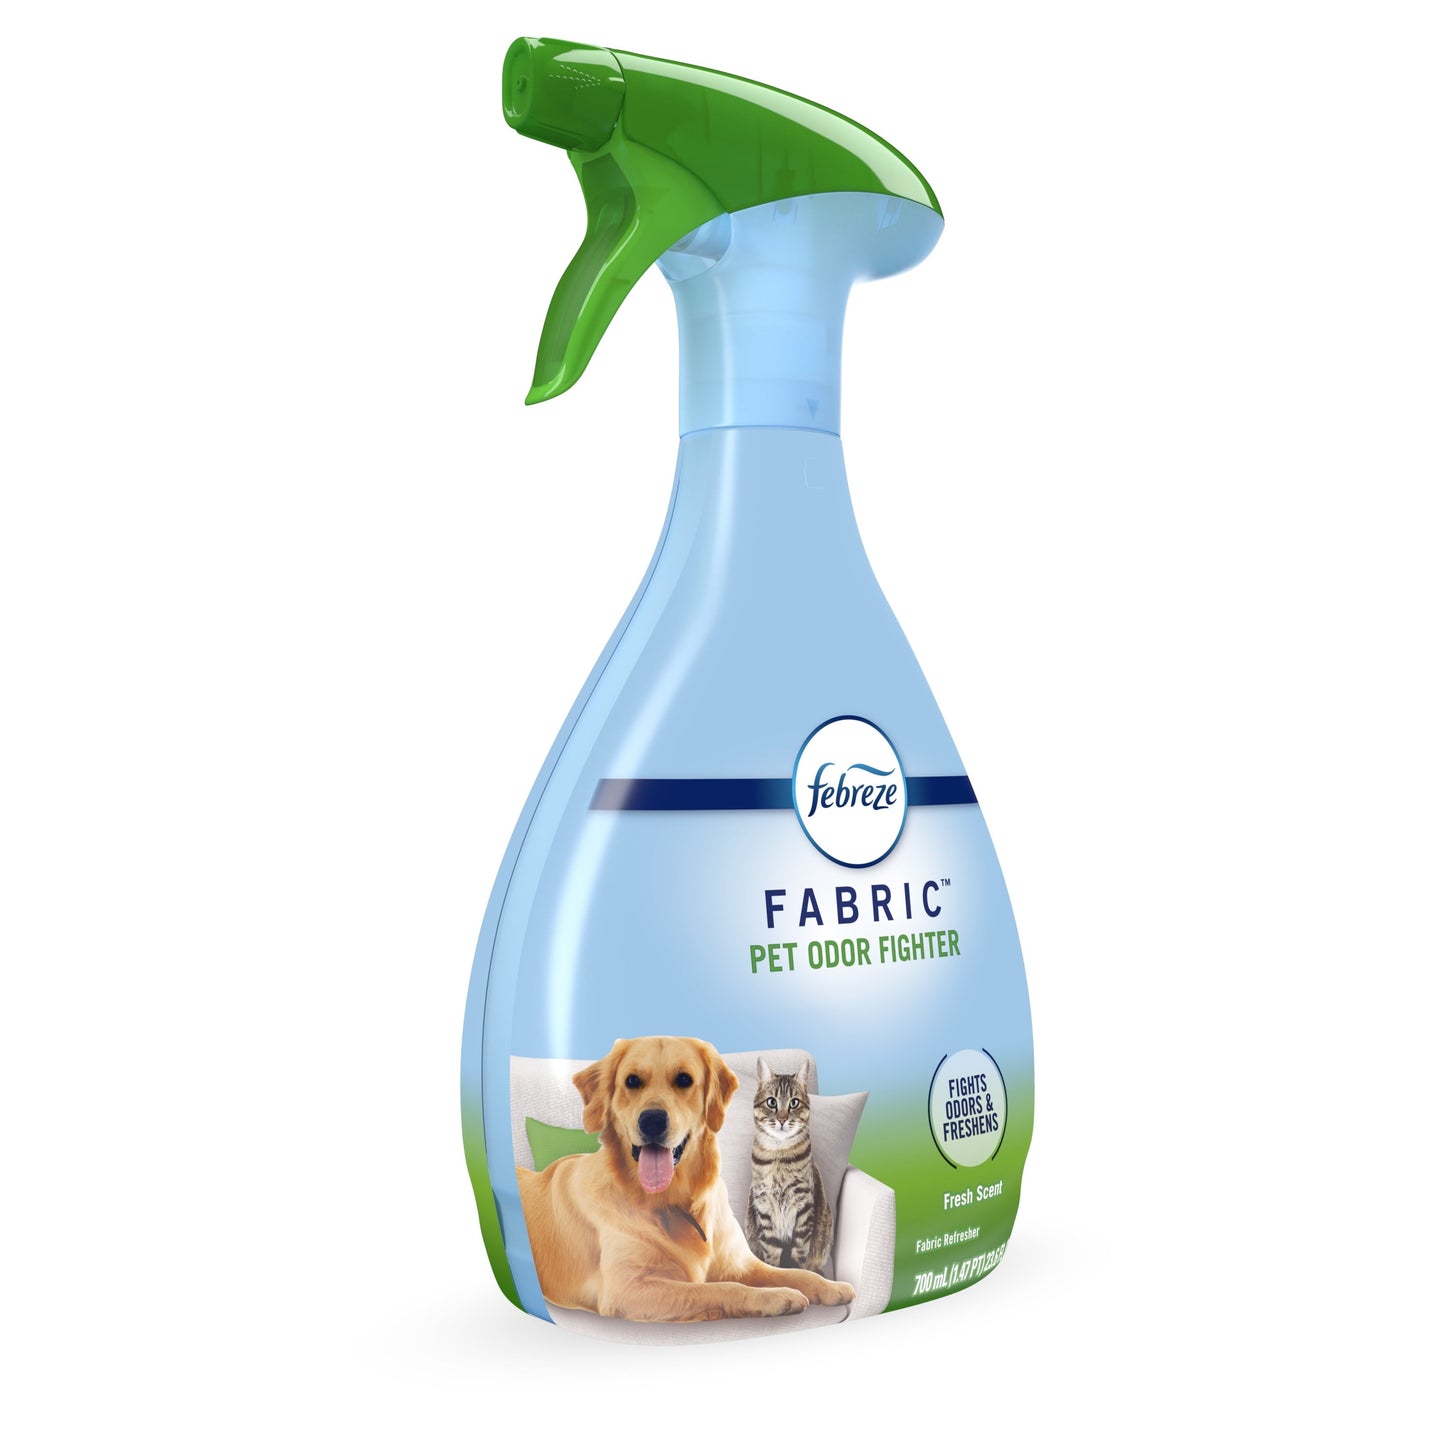 Febreze Fabric Spray Pet Odor Fighter Fresh Scent 23.6 fl oz